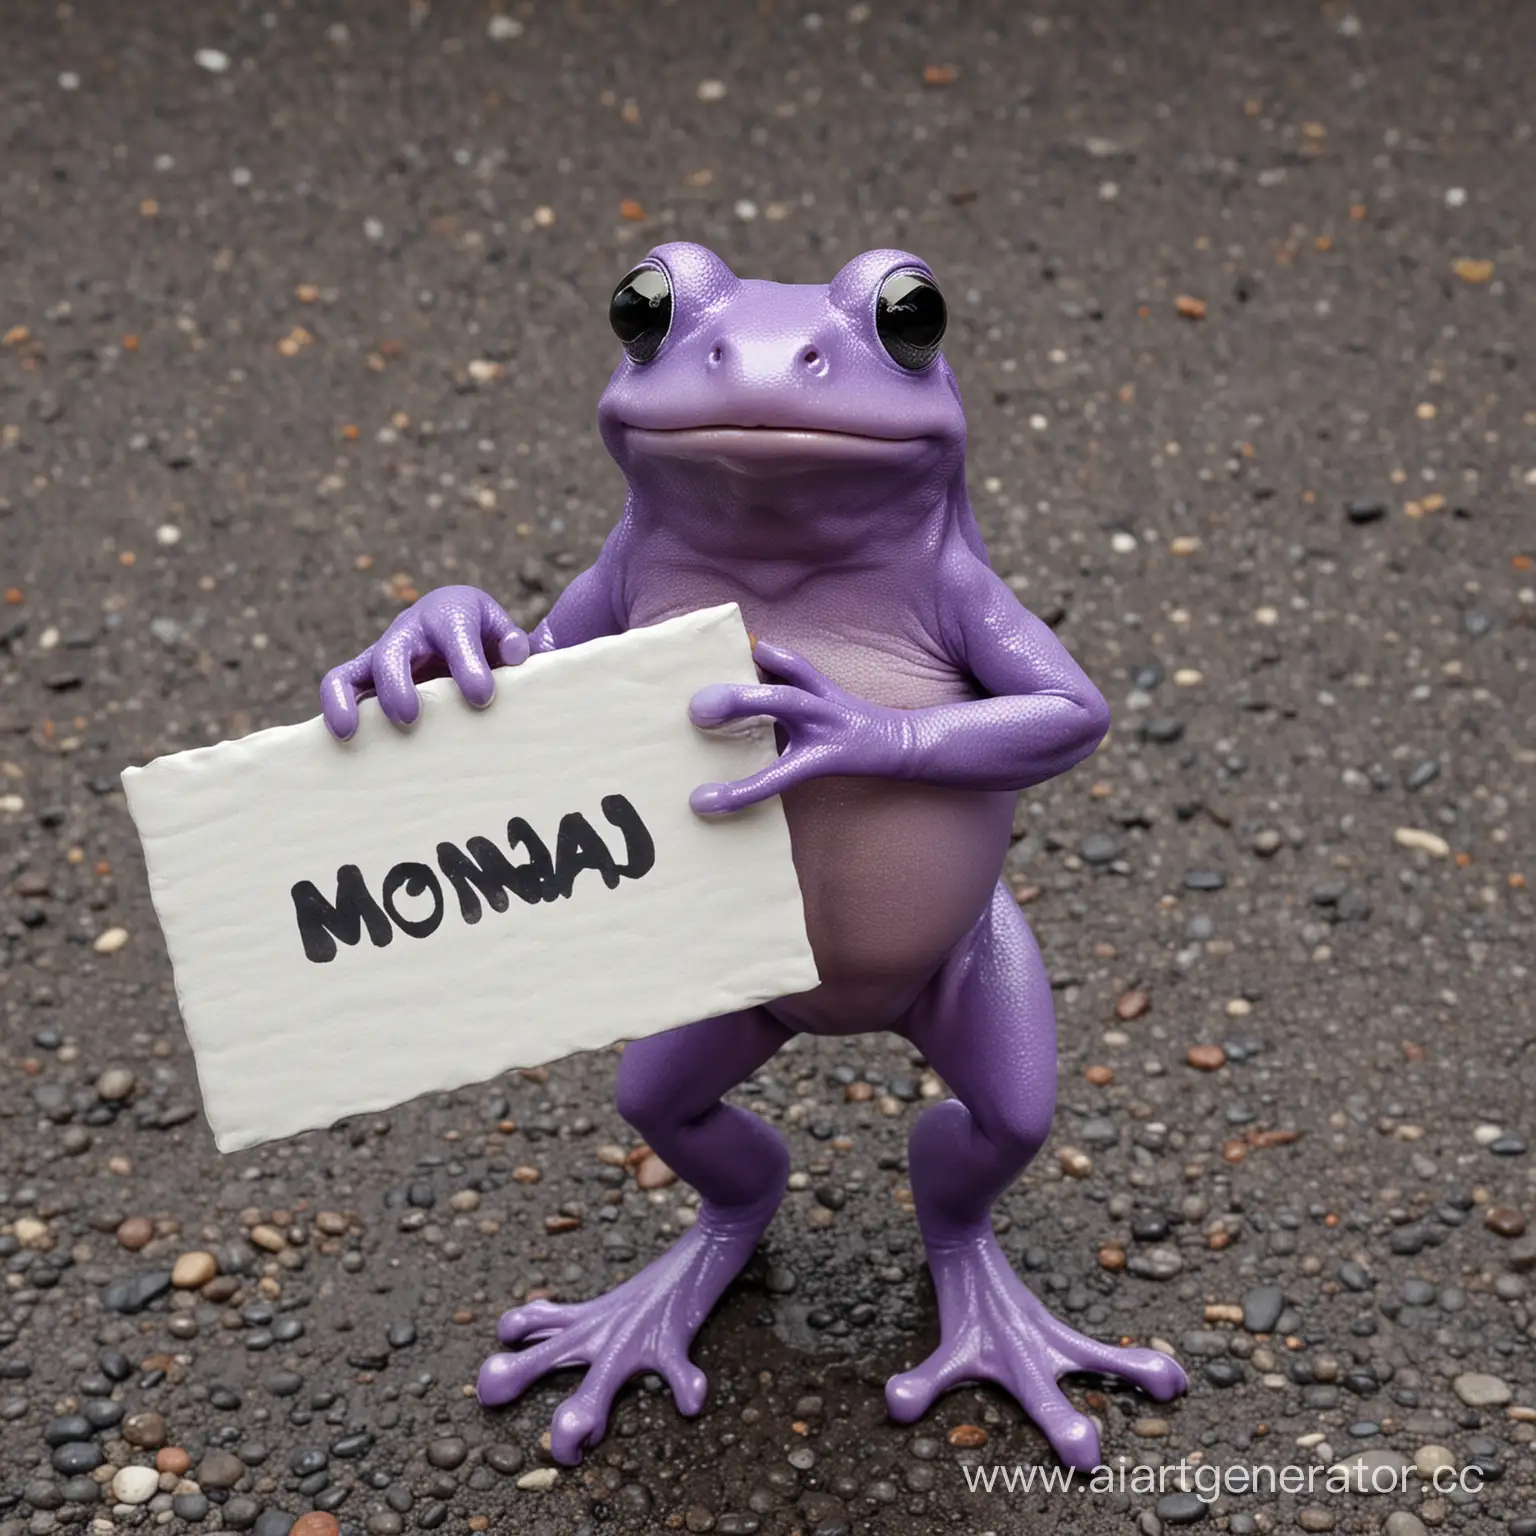 purple frog holding a sign "MONAD"
 "MONAD"
 "MONAD"